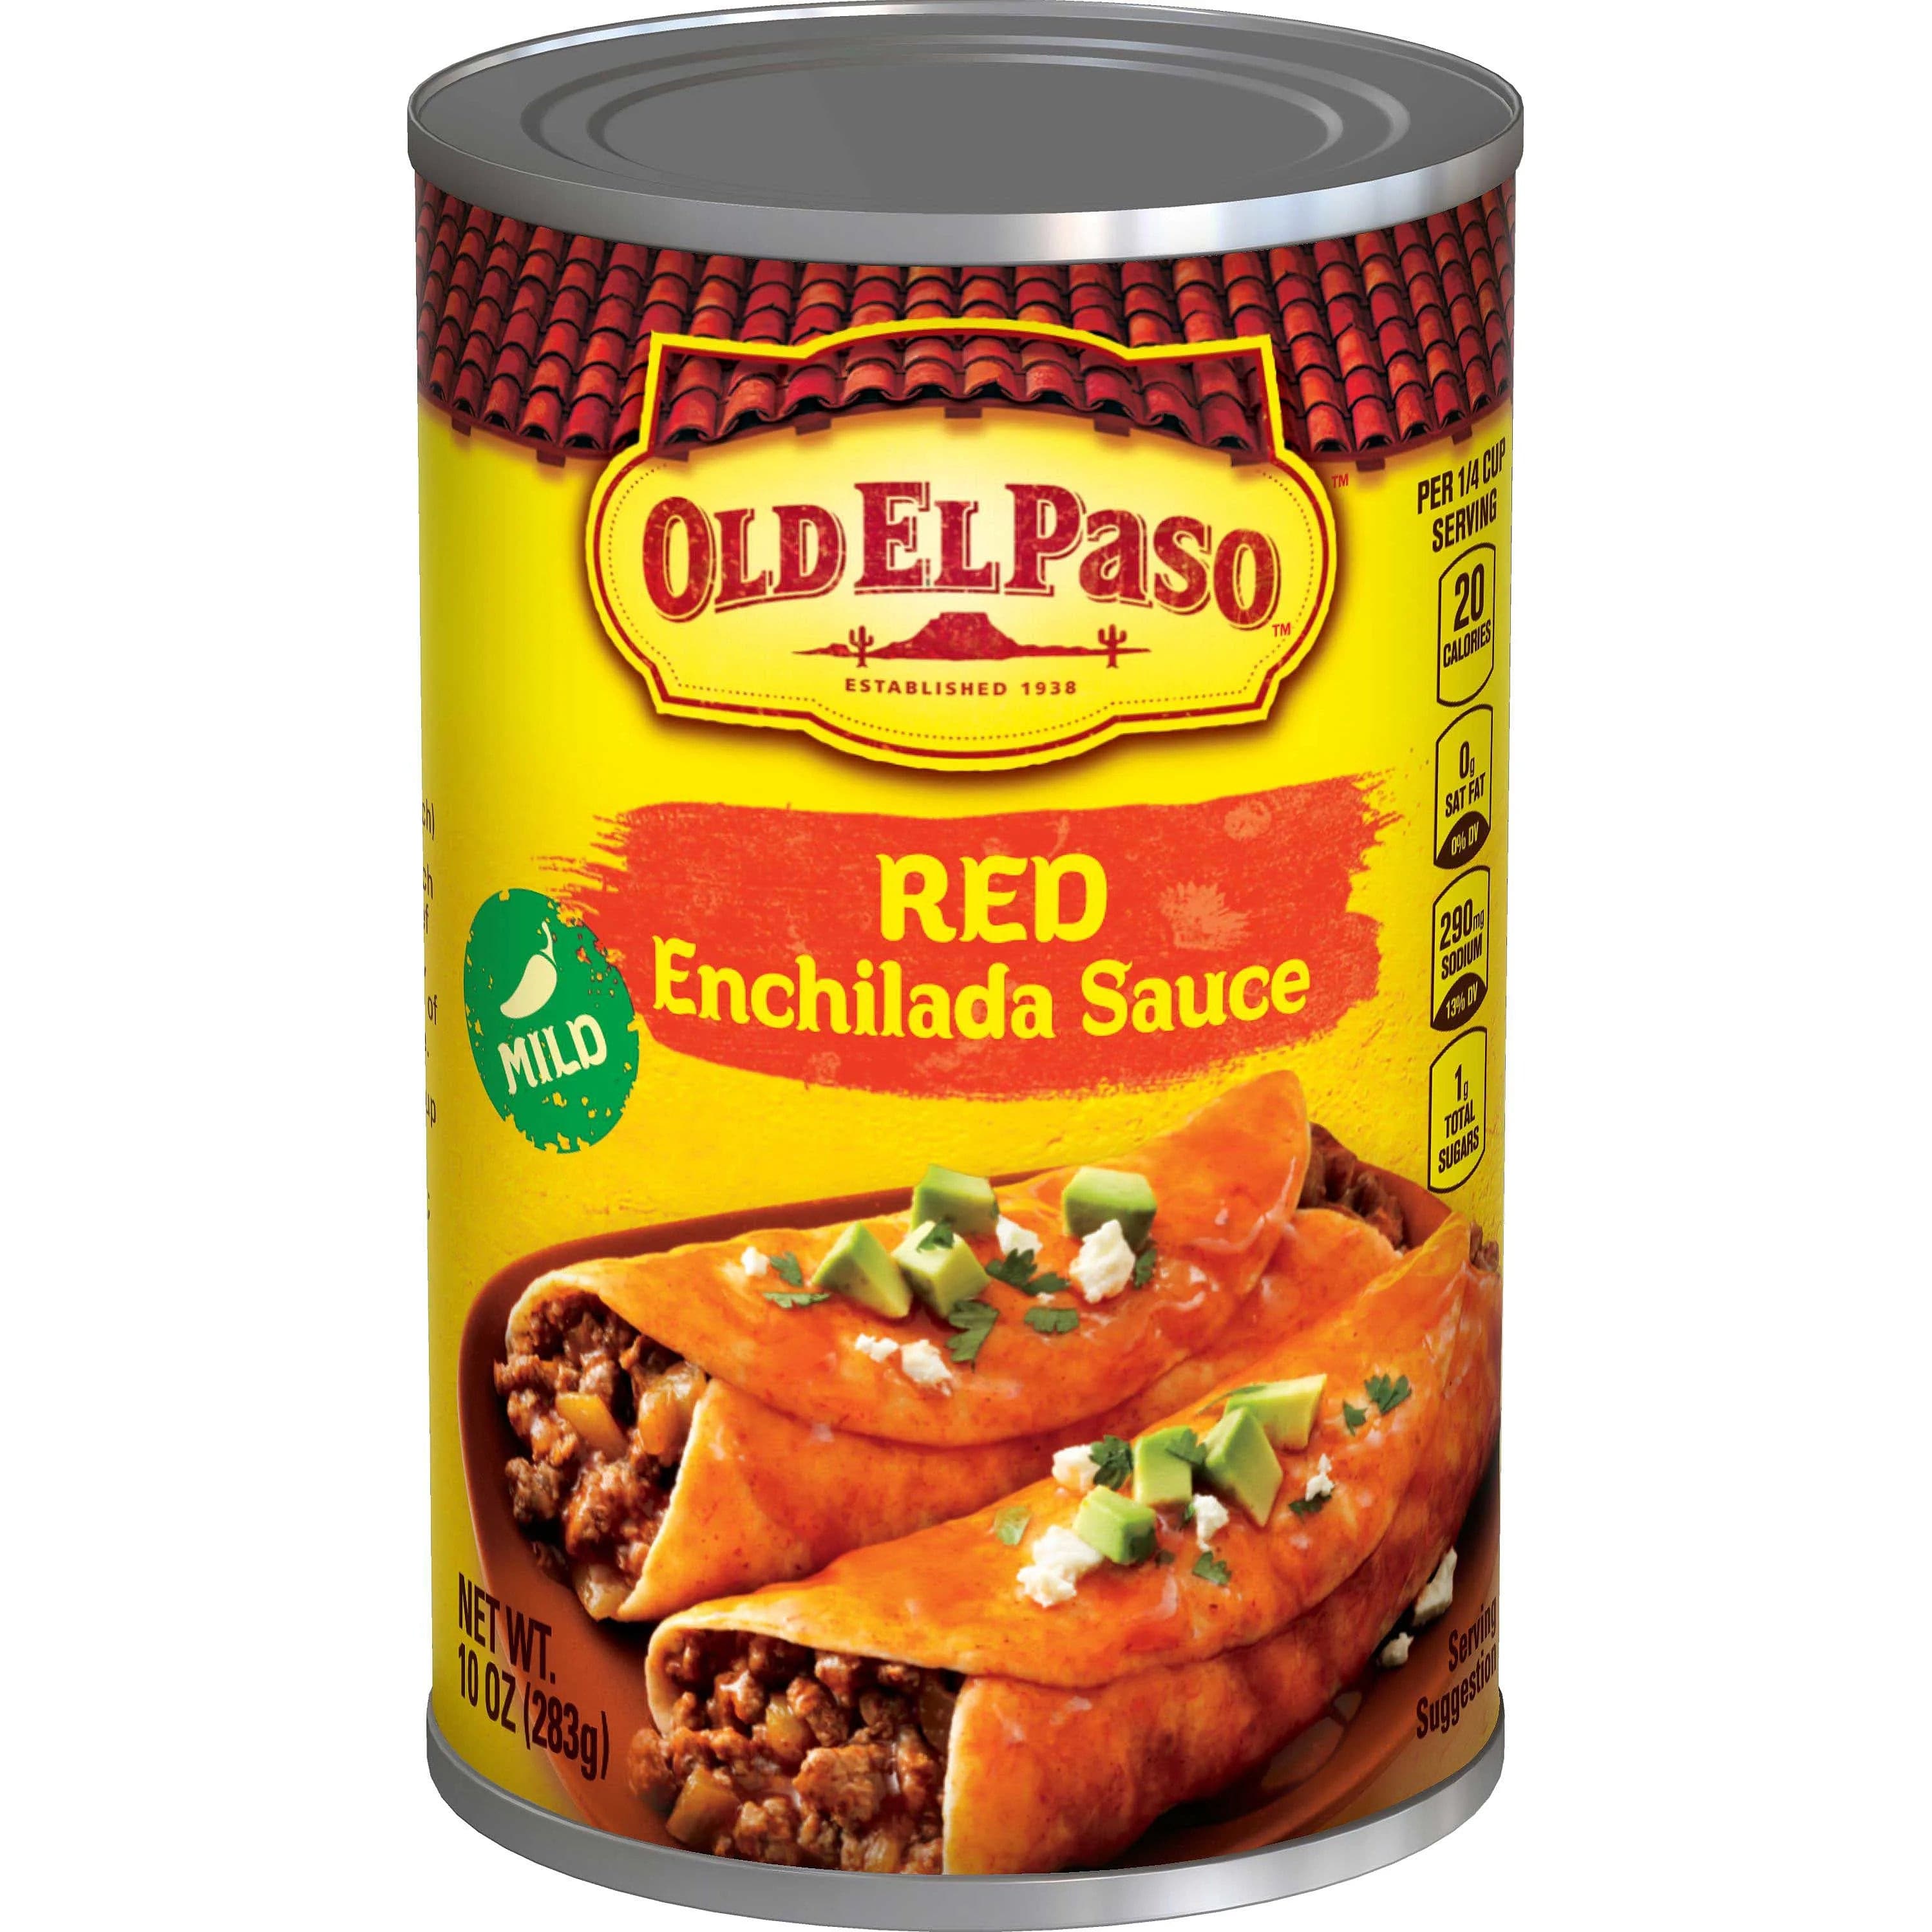 Old El Paso Enchilada Sauce, Mild, red 10 oz.